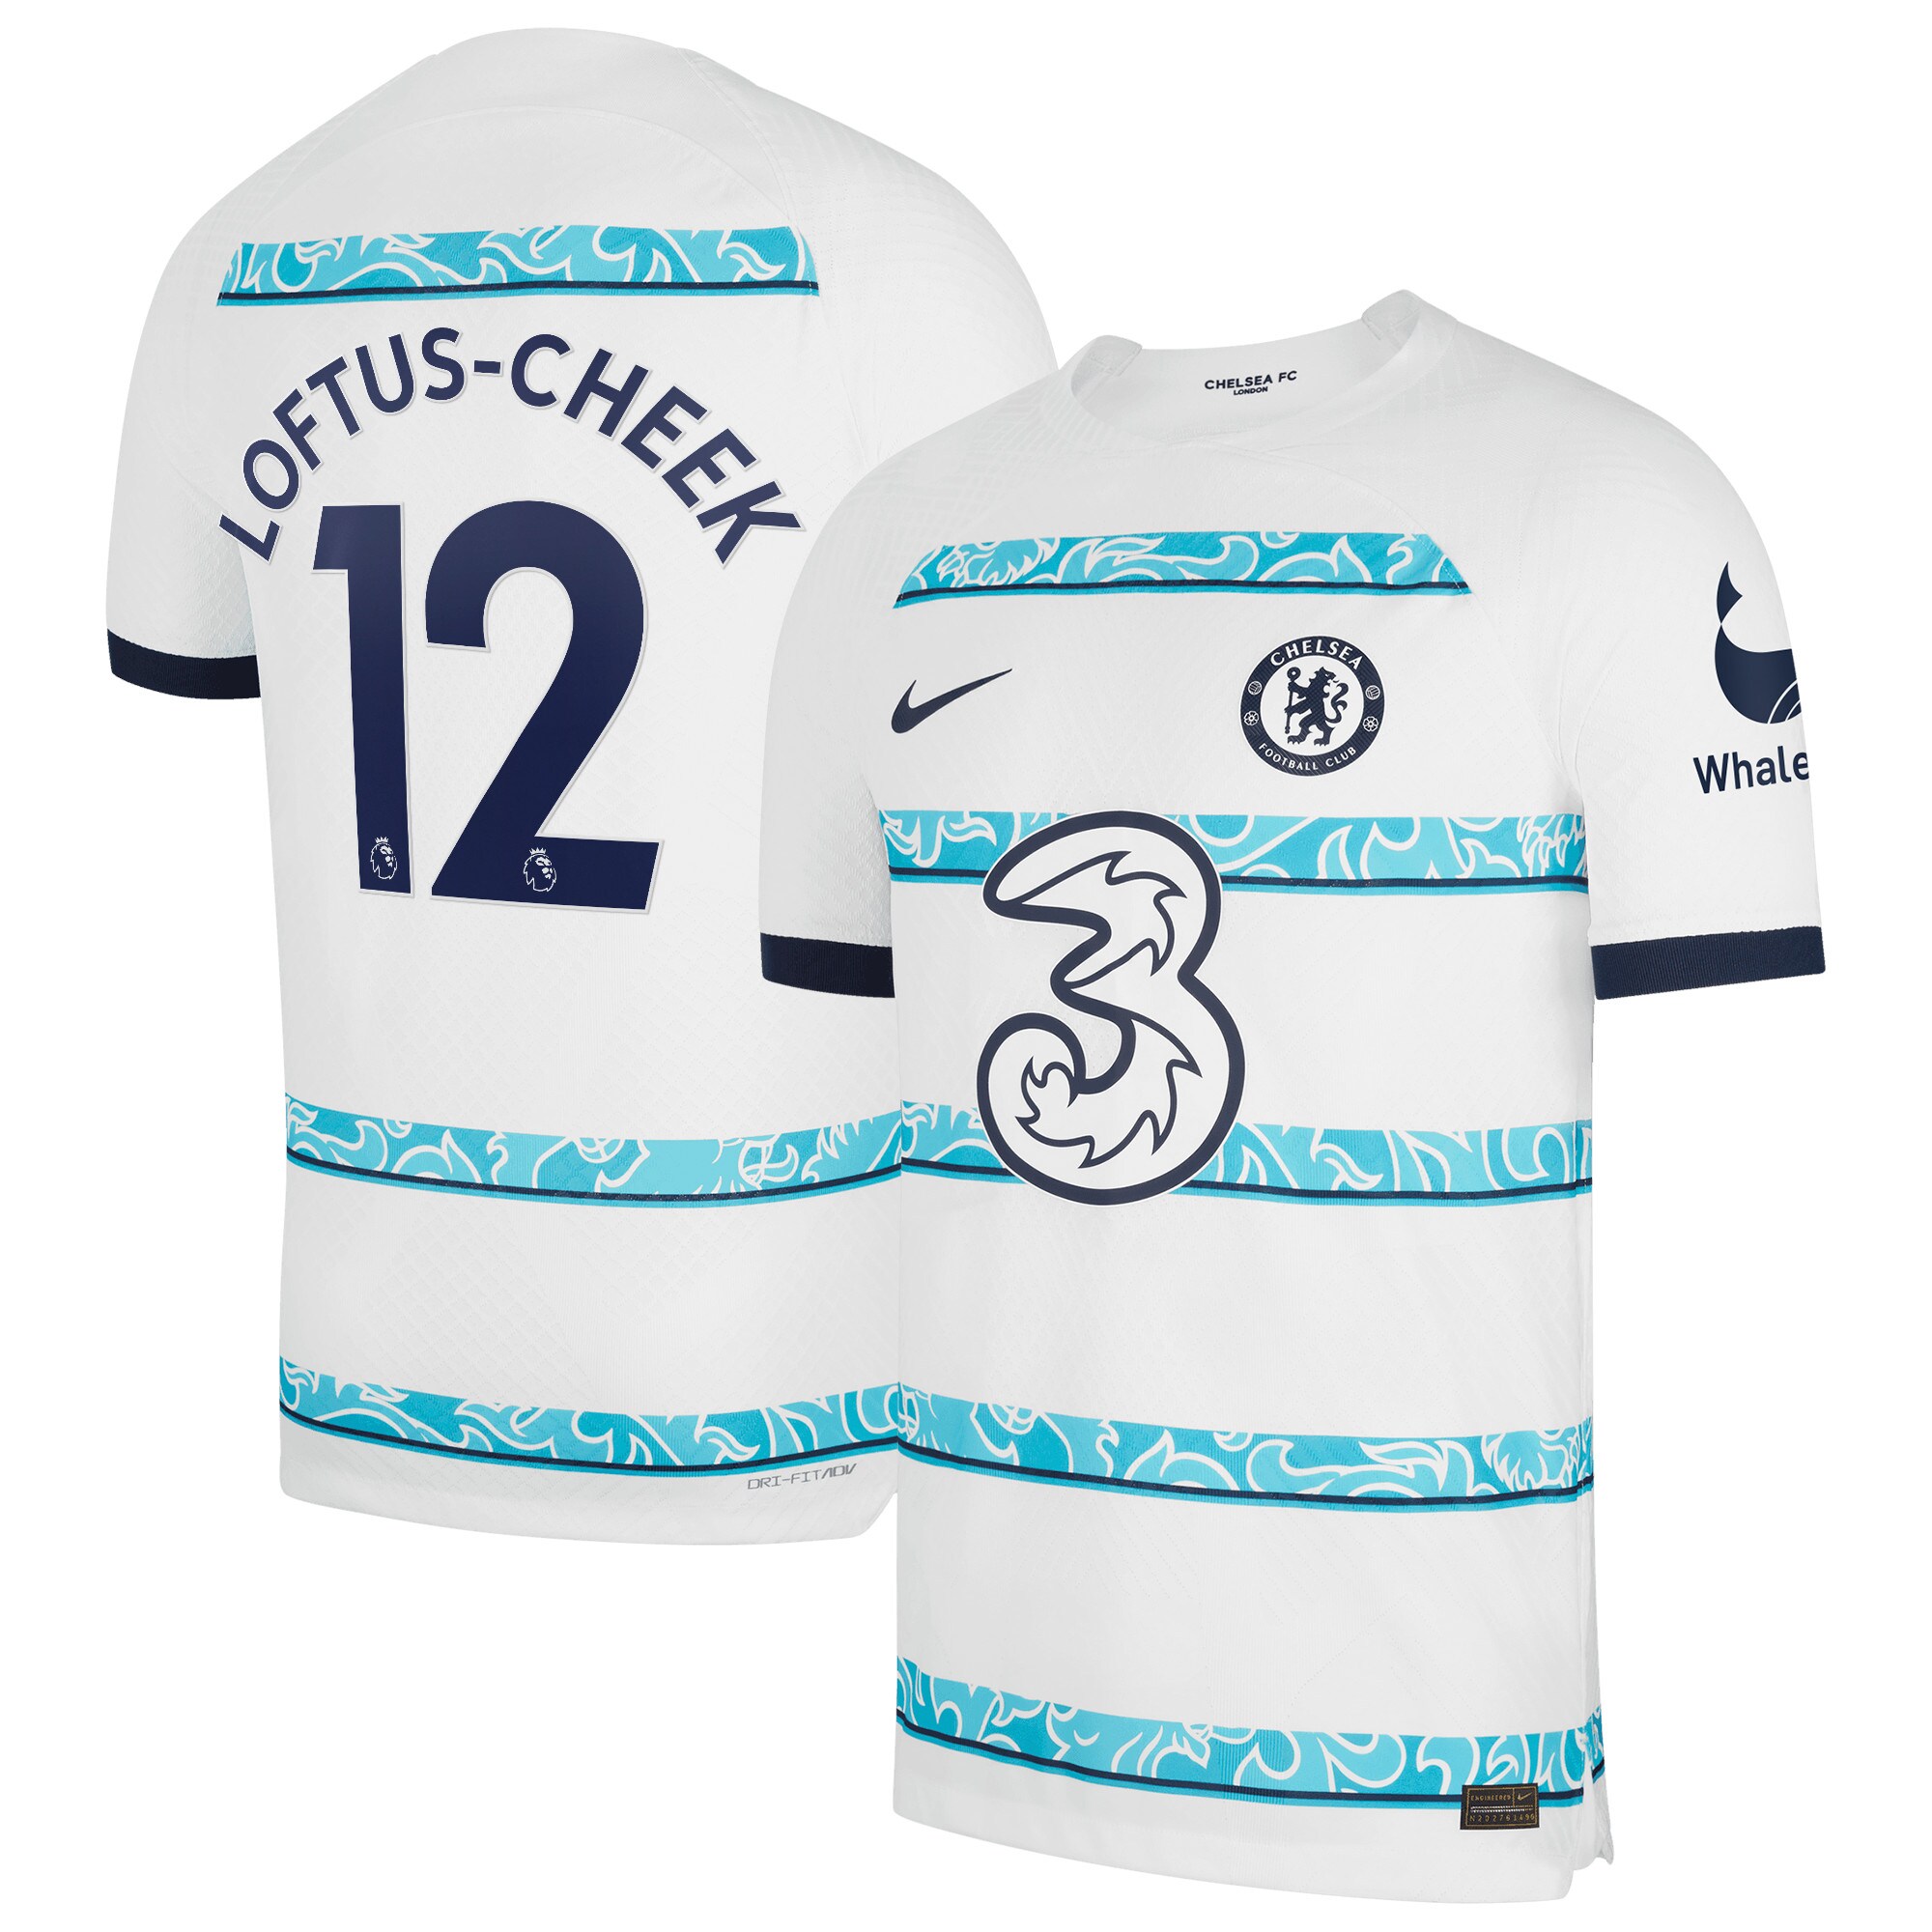 Chelsea Away Vapor Match Shirt 2022-23 with Loftus-Cheek 12 printing